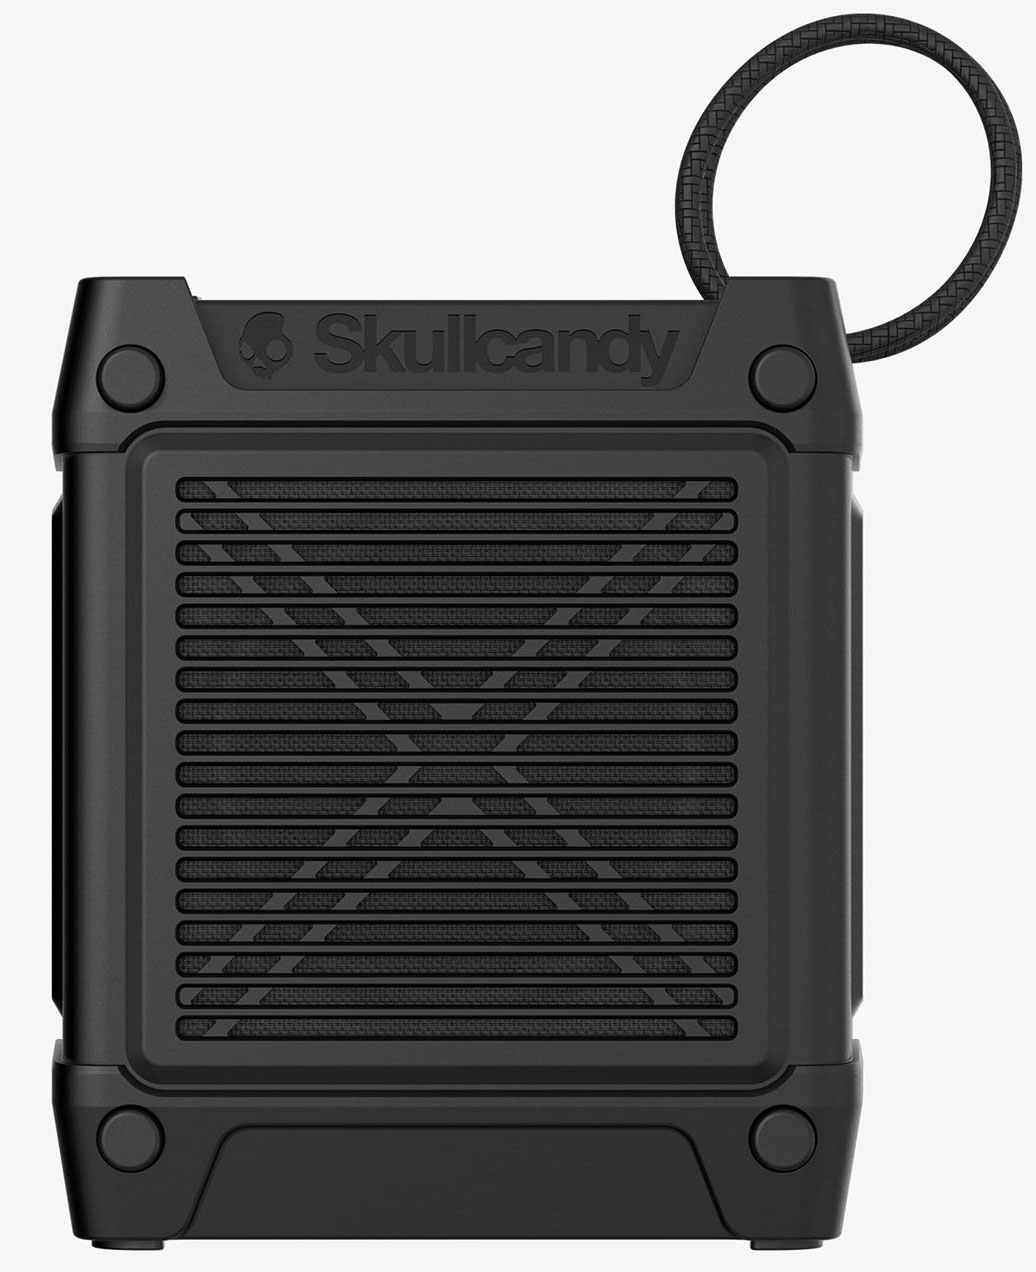 Skull Candy Shrapnel Black Splash & Drop Resistant Speaker